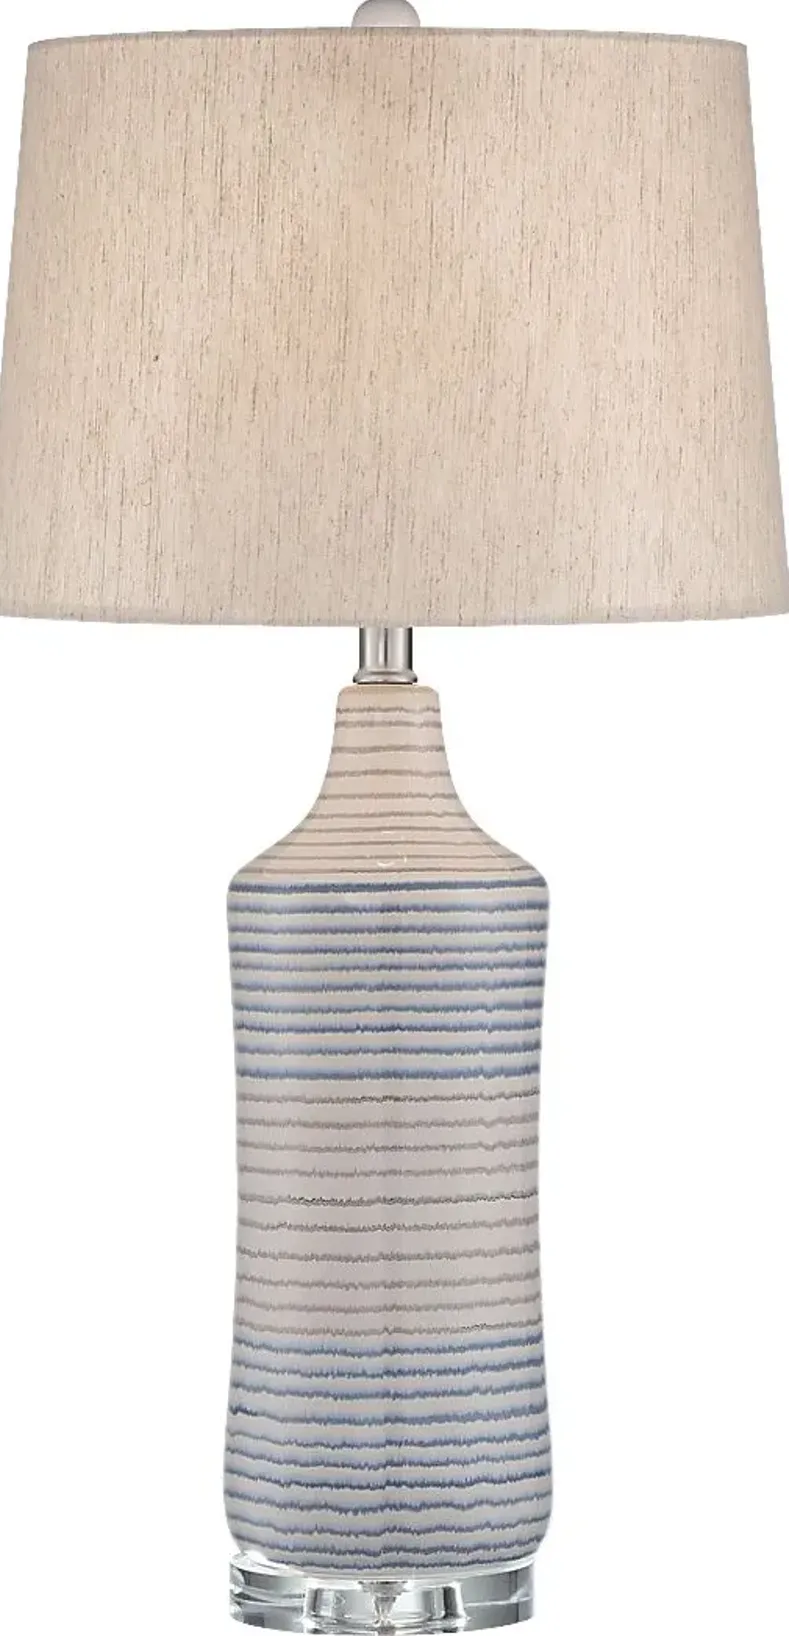 Farlight White Table Lamp